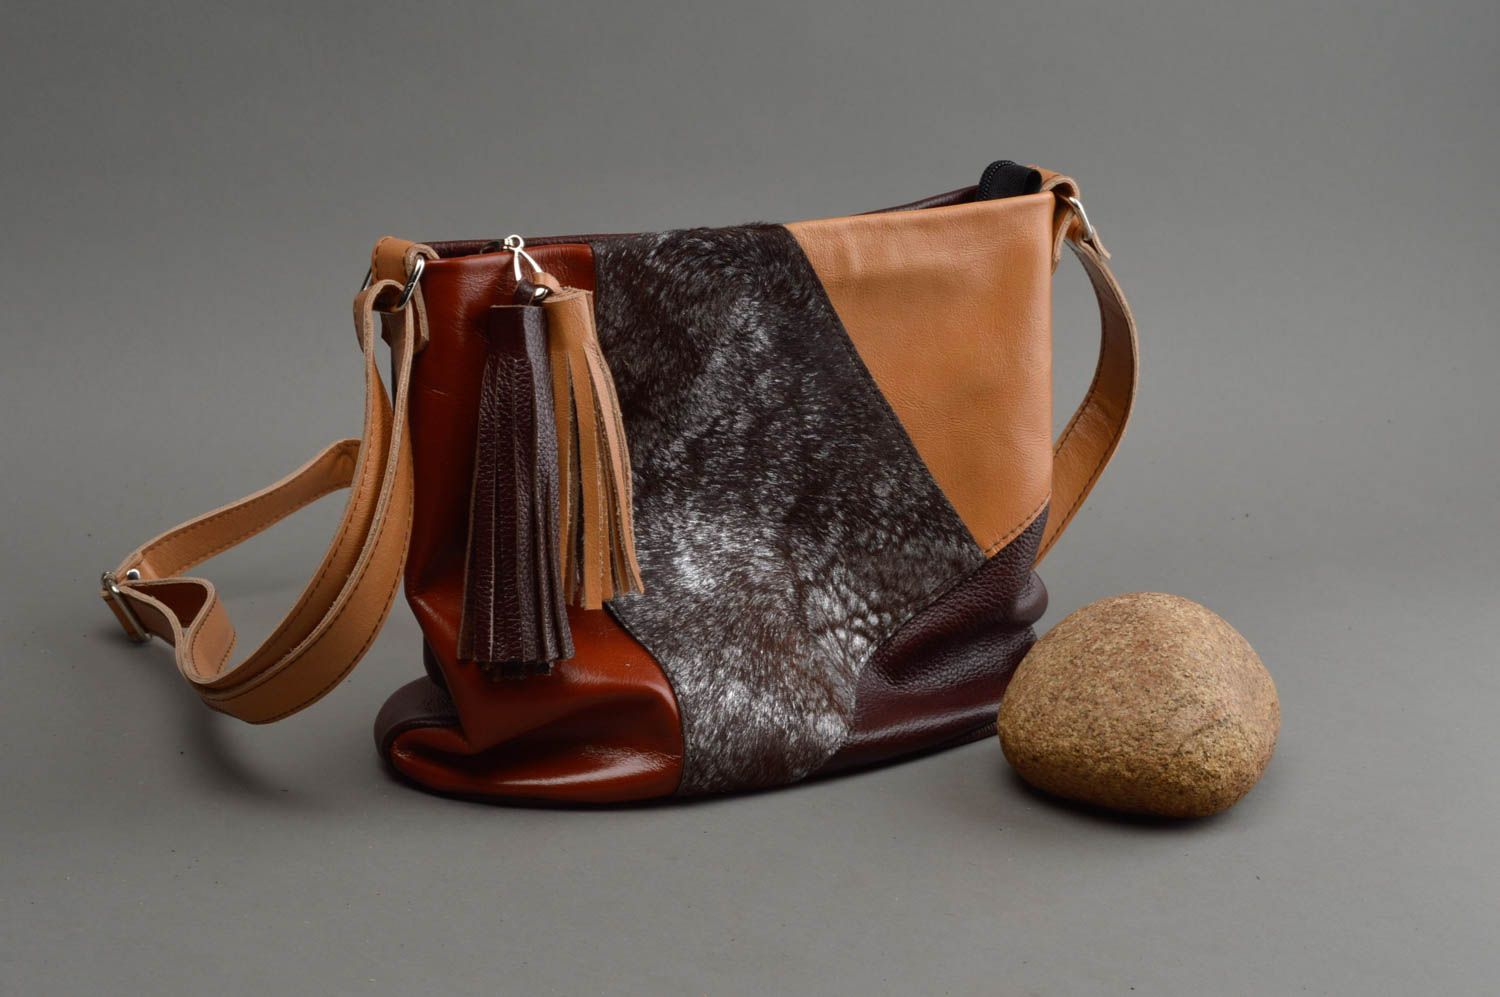 Unusual handcrafted leather handbag leather shoulder bag designs gifts for her photo 1